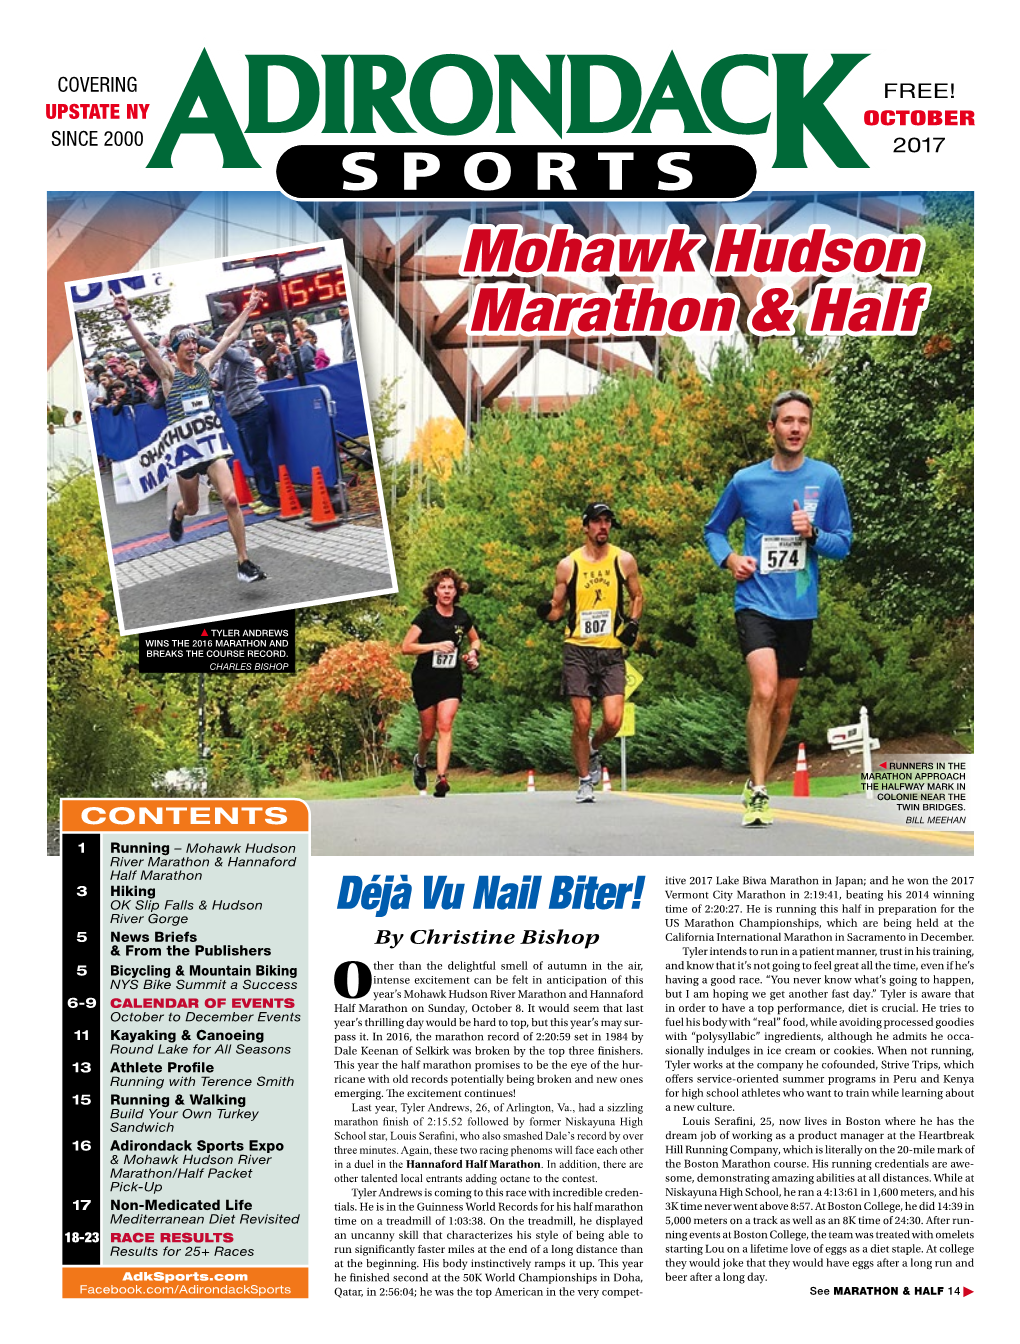 Mohawk Hudson Marathon & Half